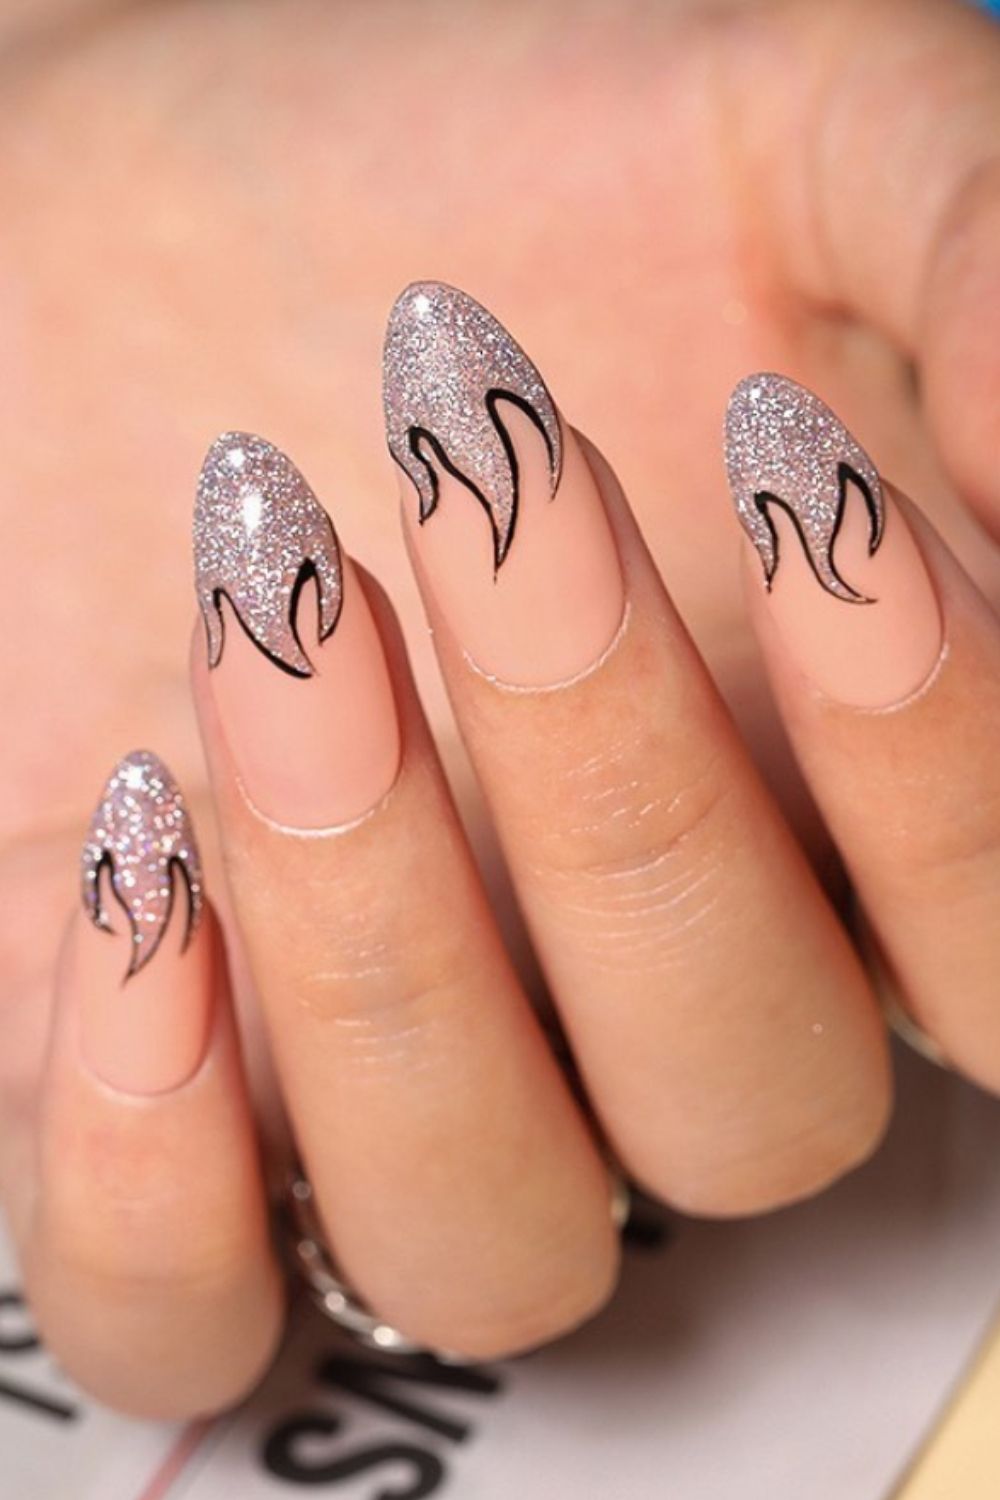 Shiny silver almond shaped nails